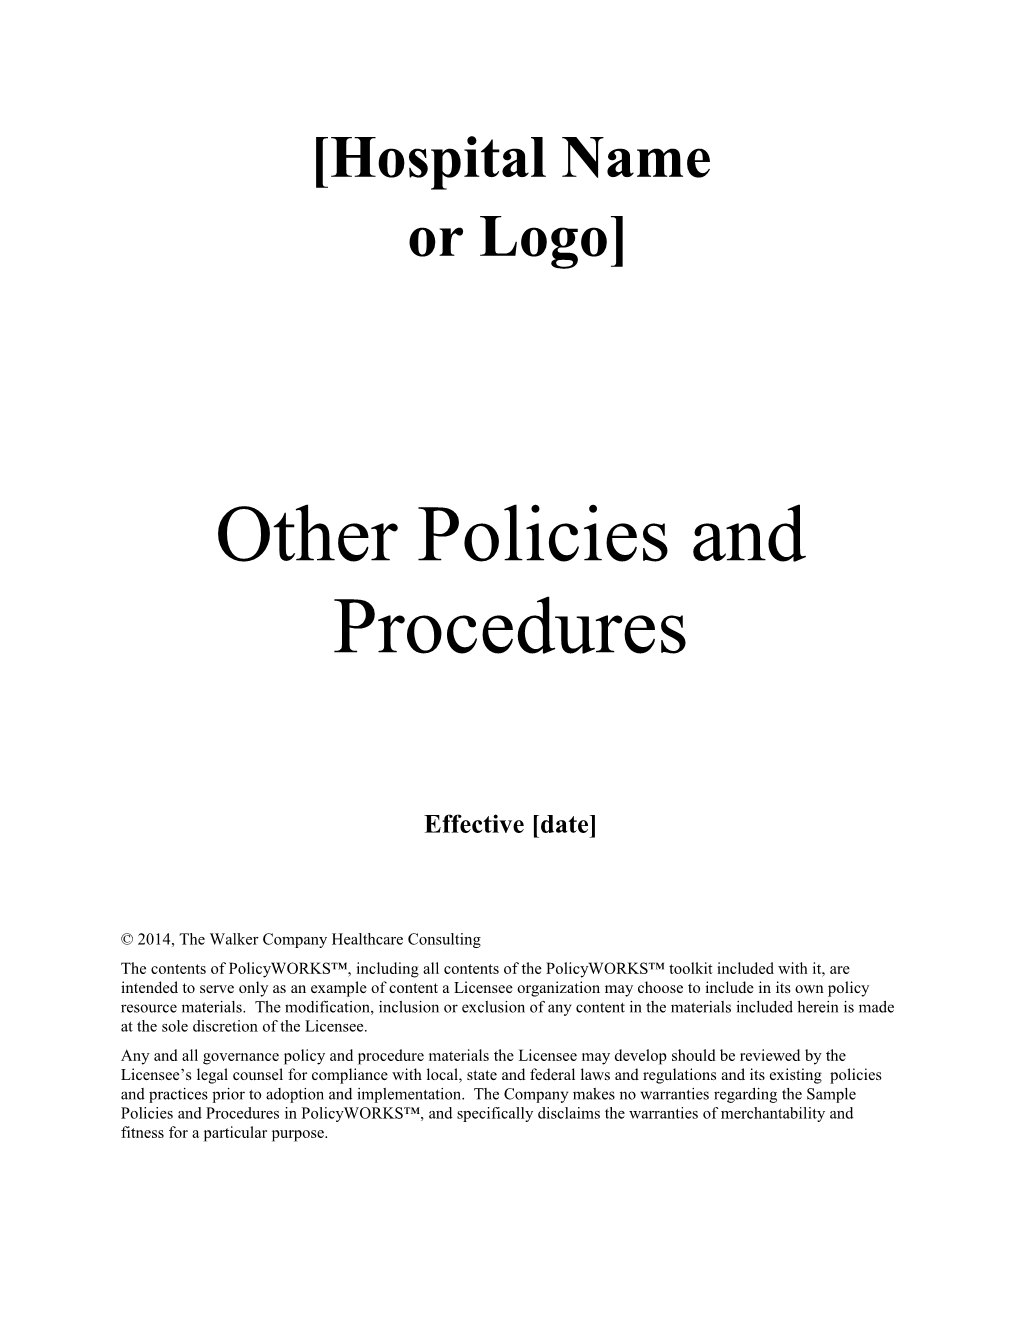 Other Policies and Procedures